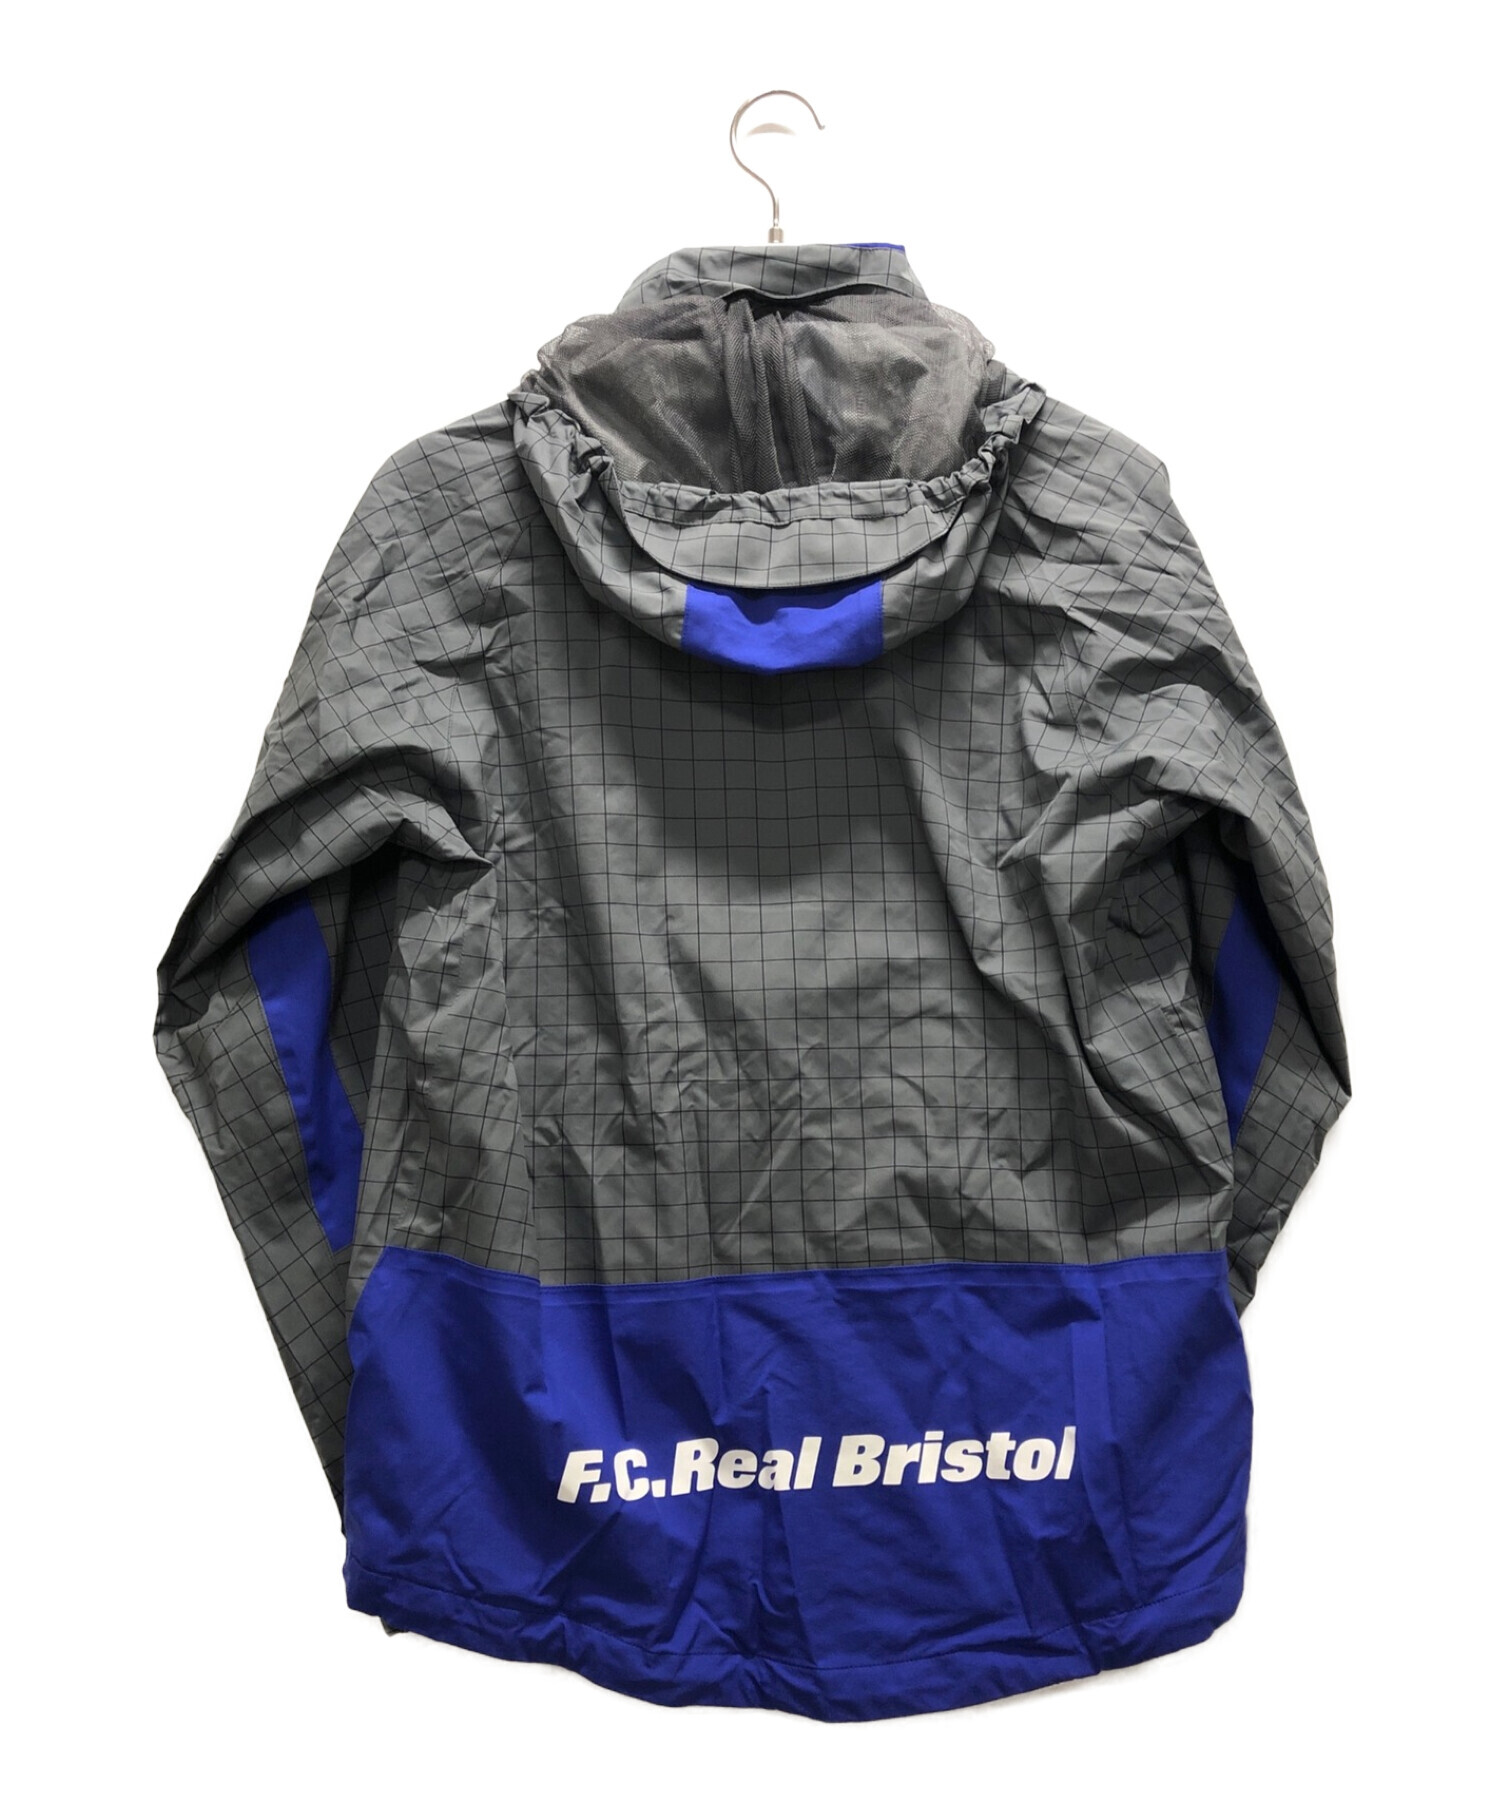 F.C.Real Bristol ナイロンジャケット サイズM正規店で購入しました